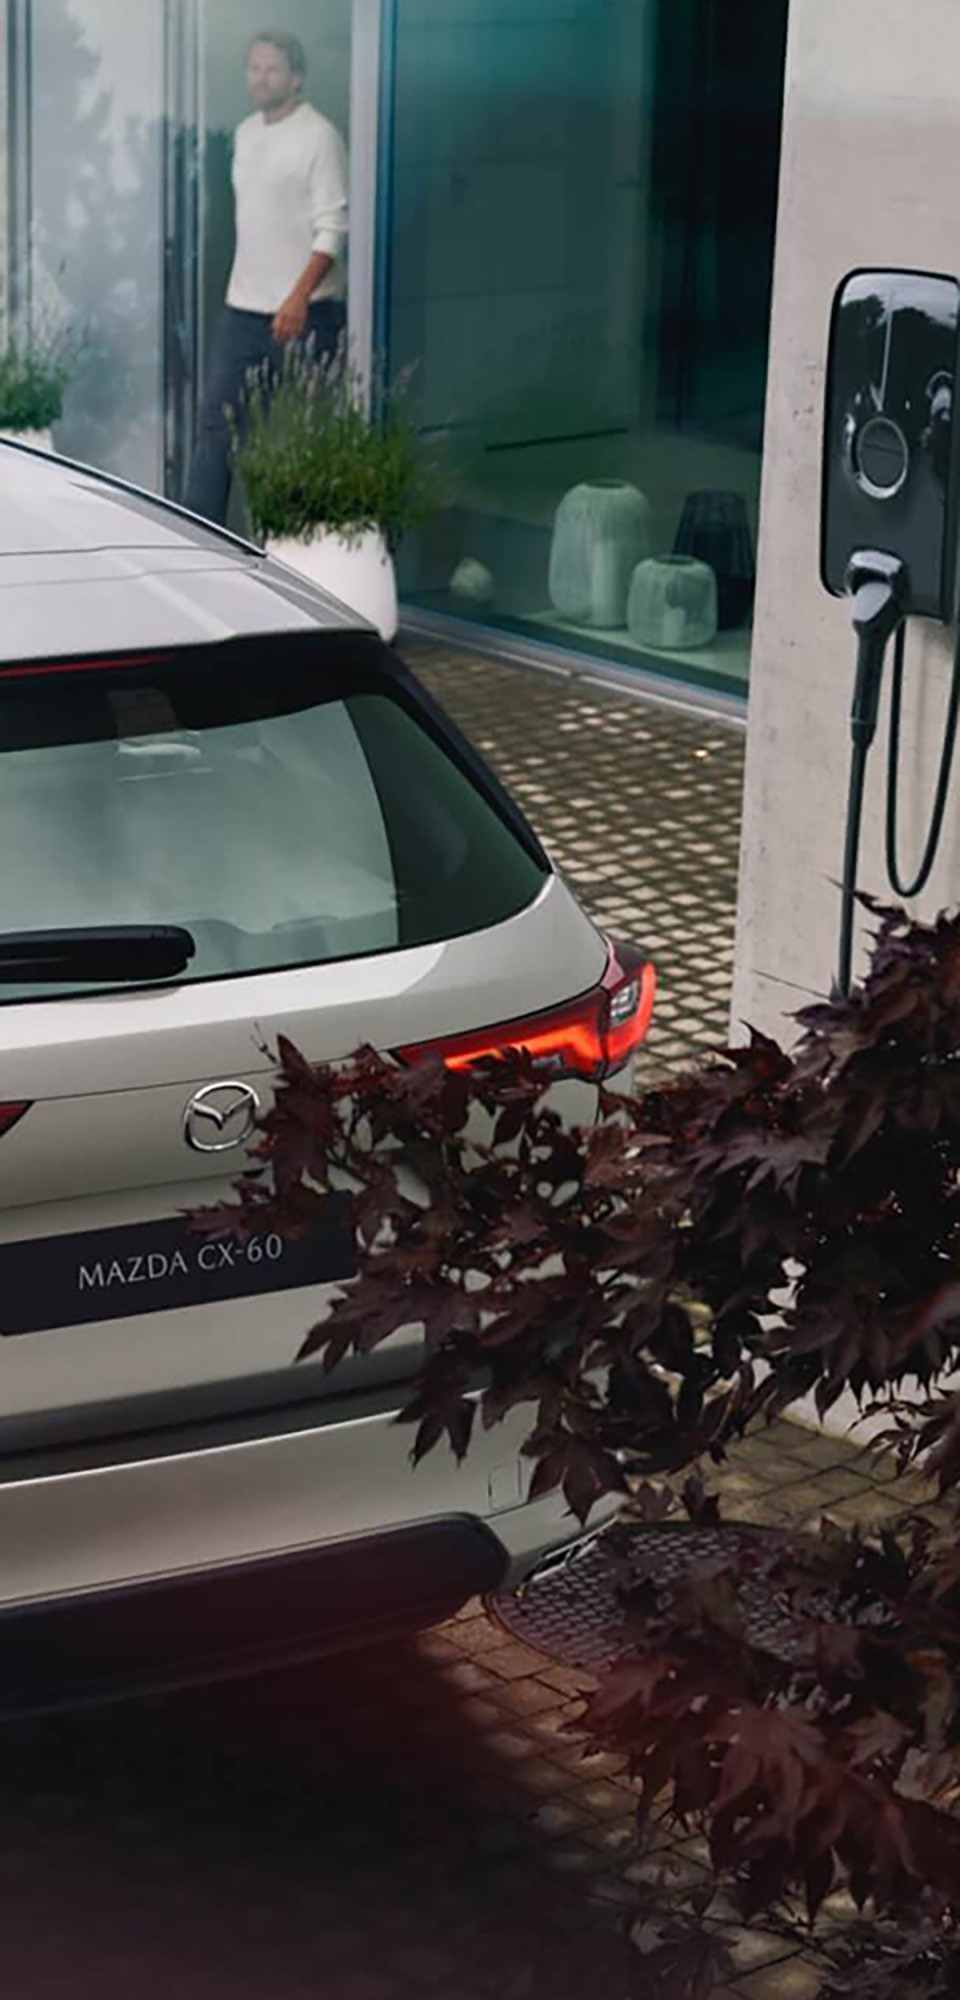 Novi priključnohibridni SUV Mazda CX-60 ob zidni omarici za polnjenje doma.